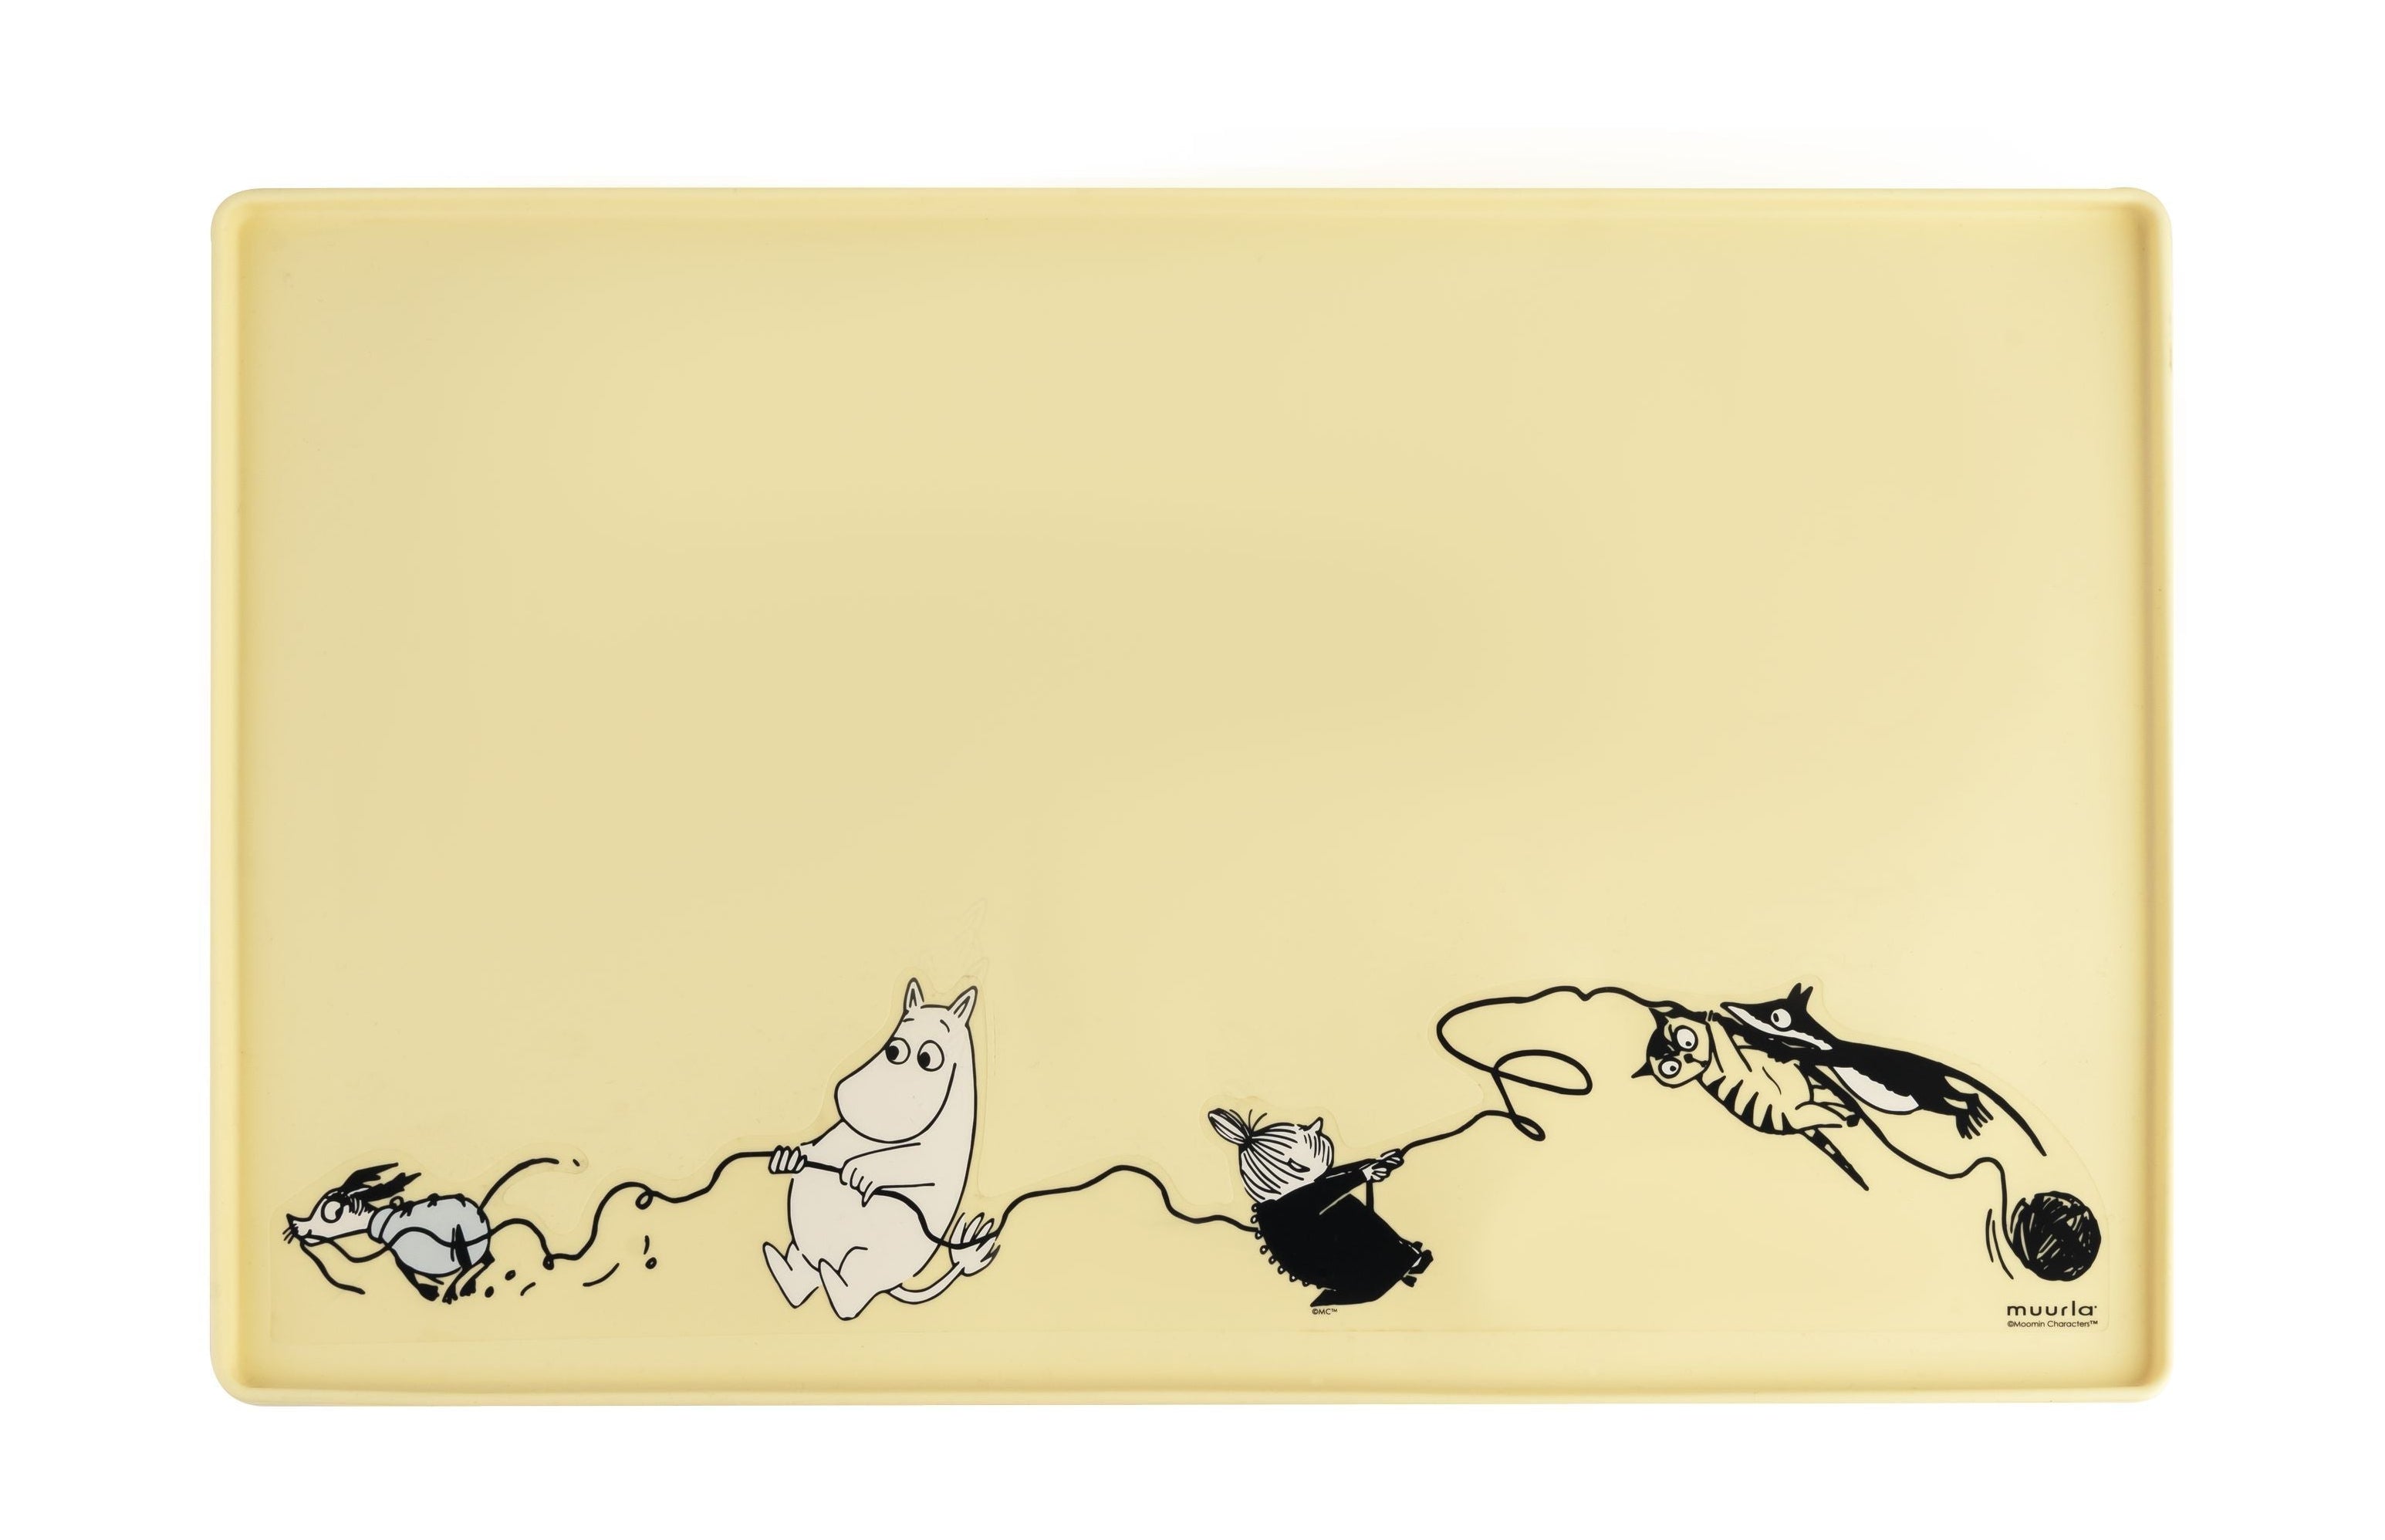 Muurla Moomin husdjur silikonmatta, gul